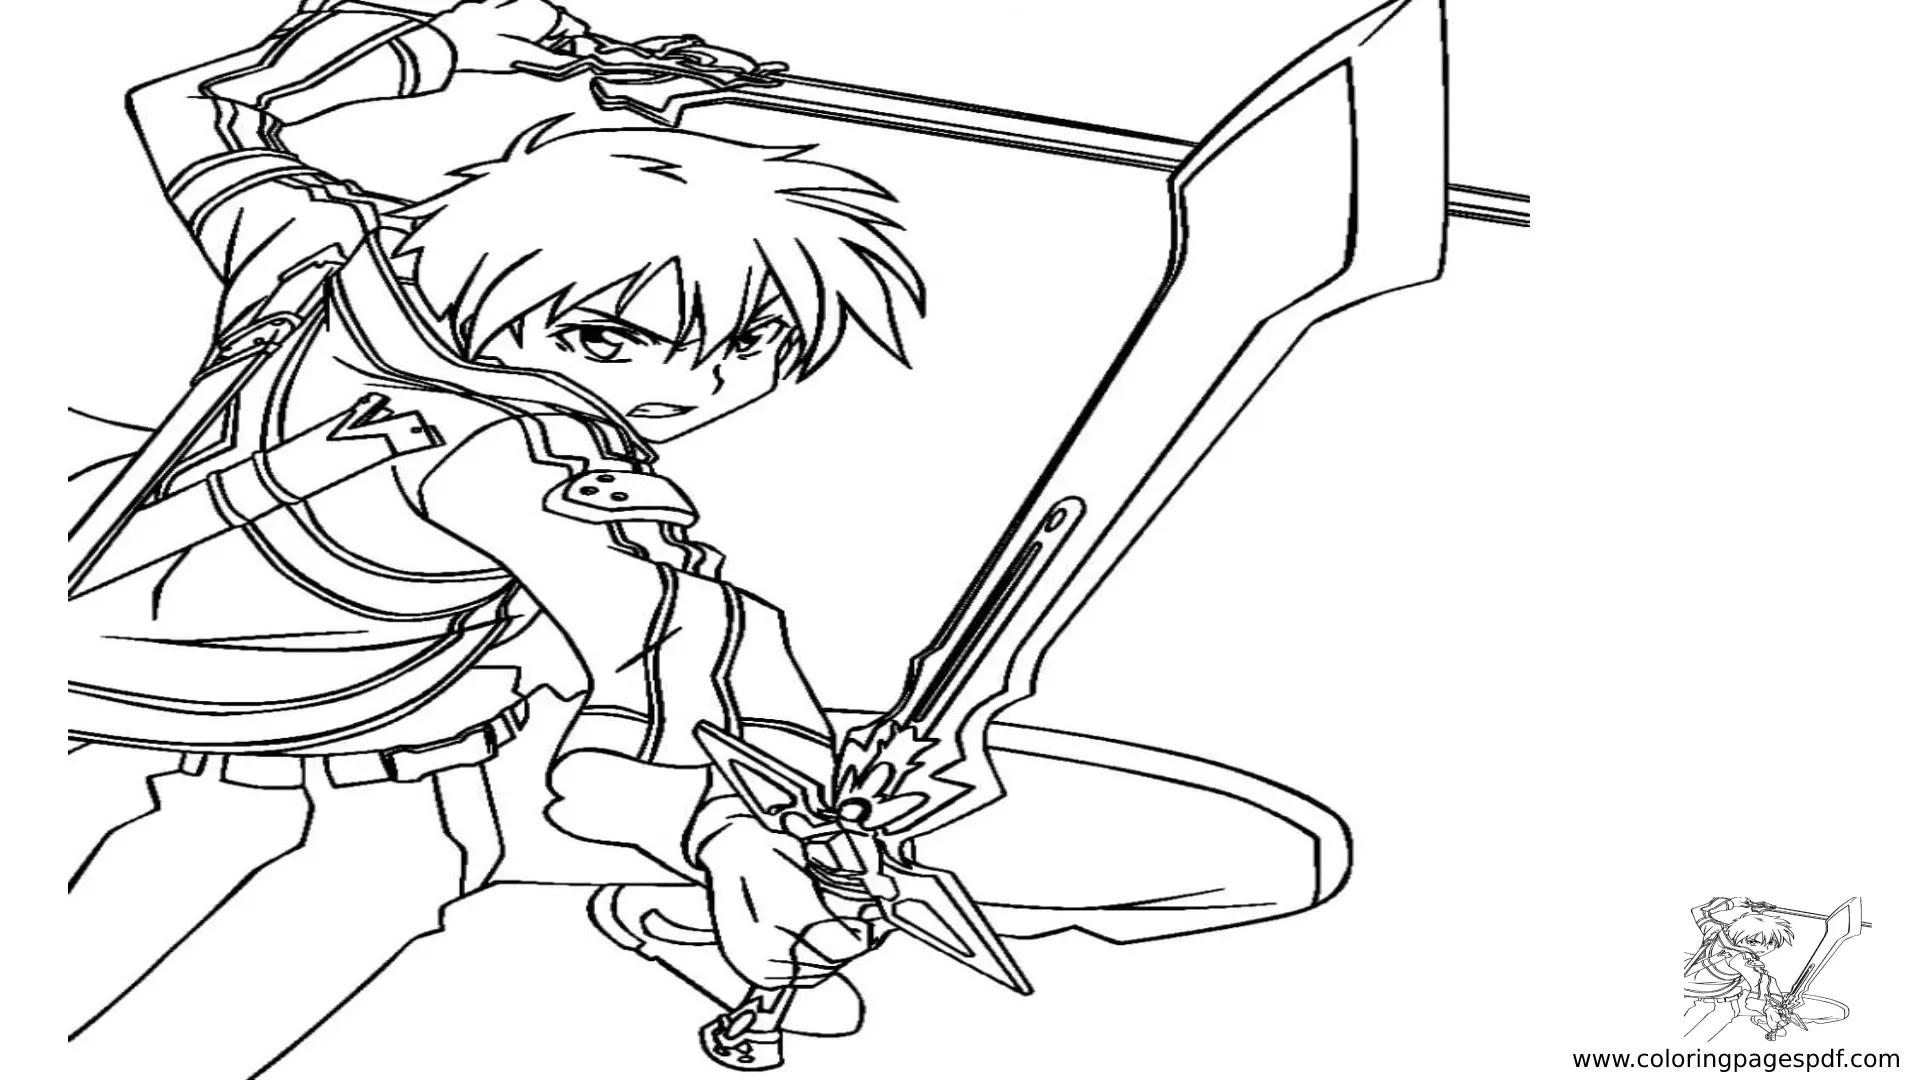 Coloring Page Of Kirito (Sword Art Online)